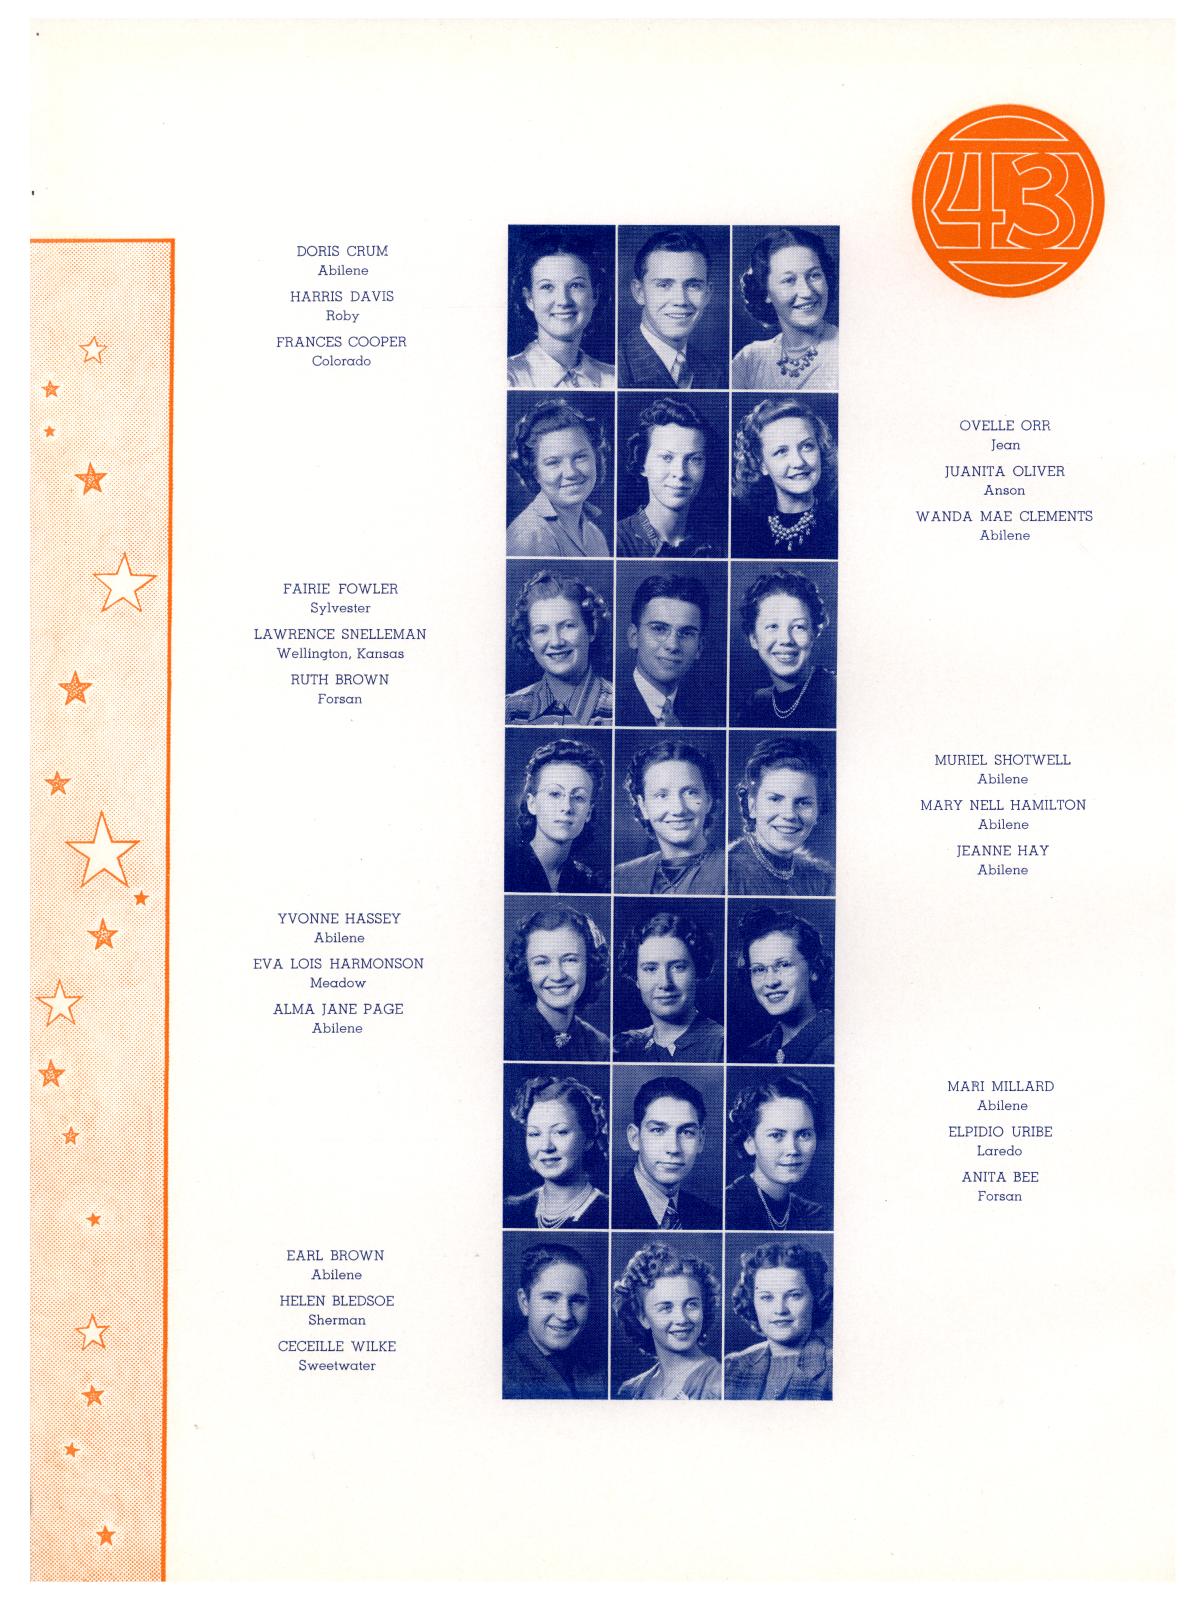 The Bronco, Yearbook of Hardin-Simmons University, 1940
                                                
                                                    81
                                                